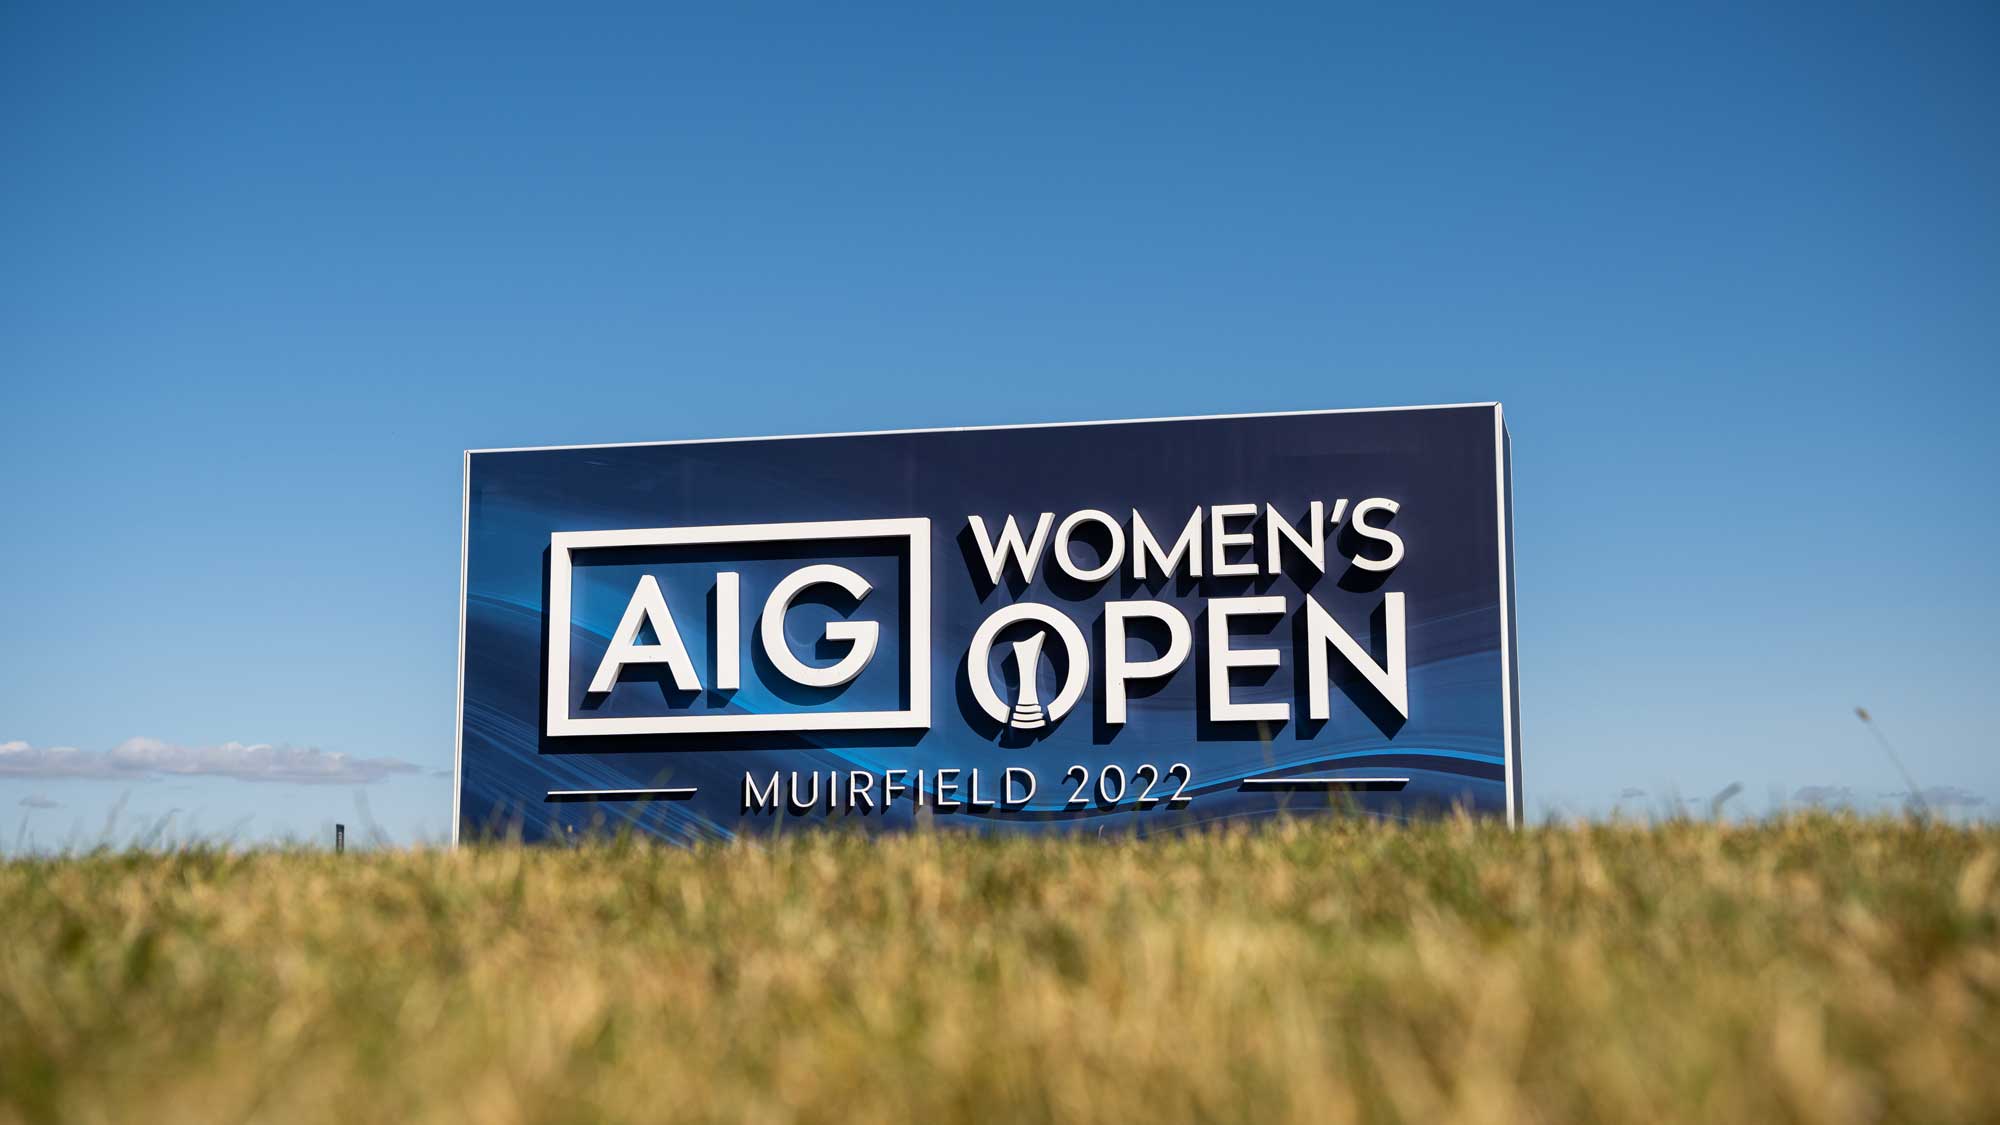 AIG Women's Open